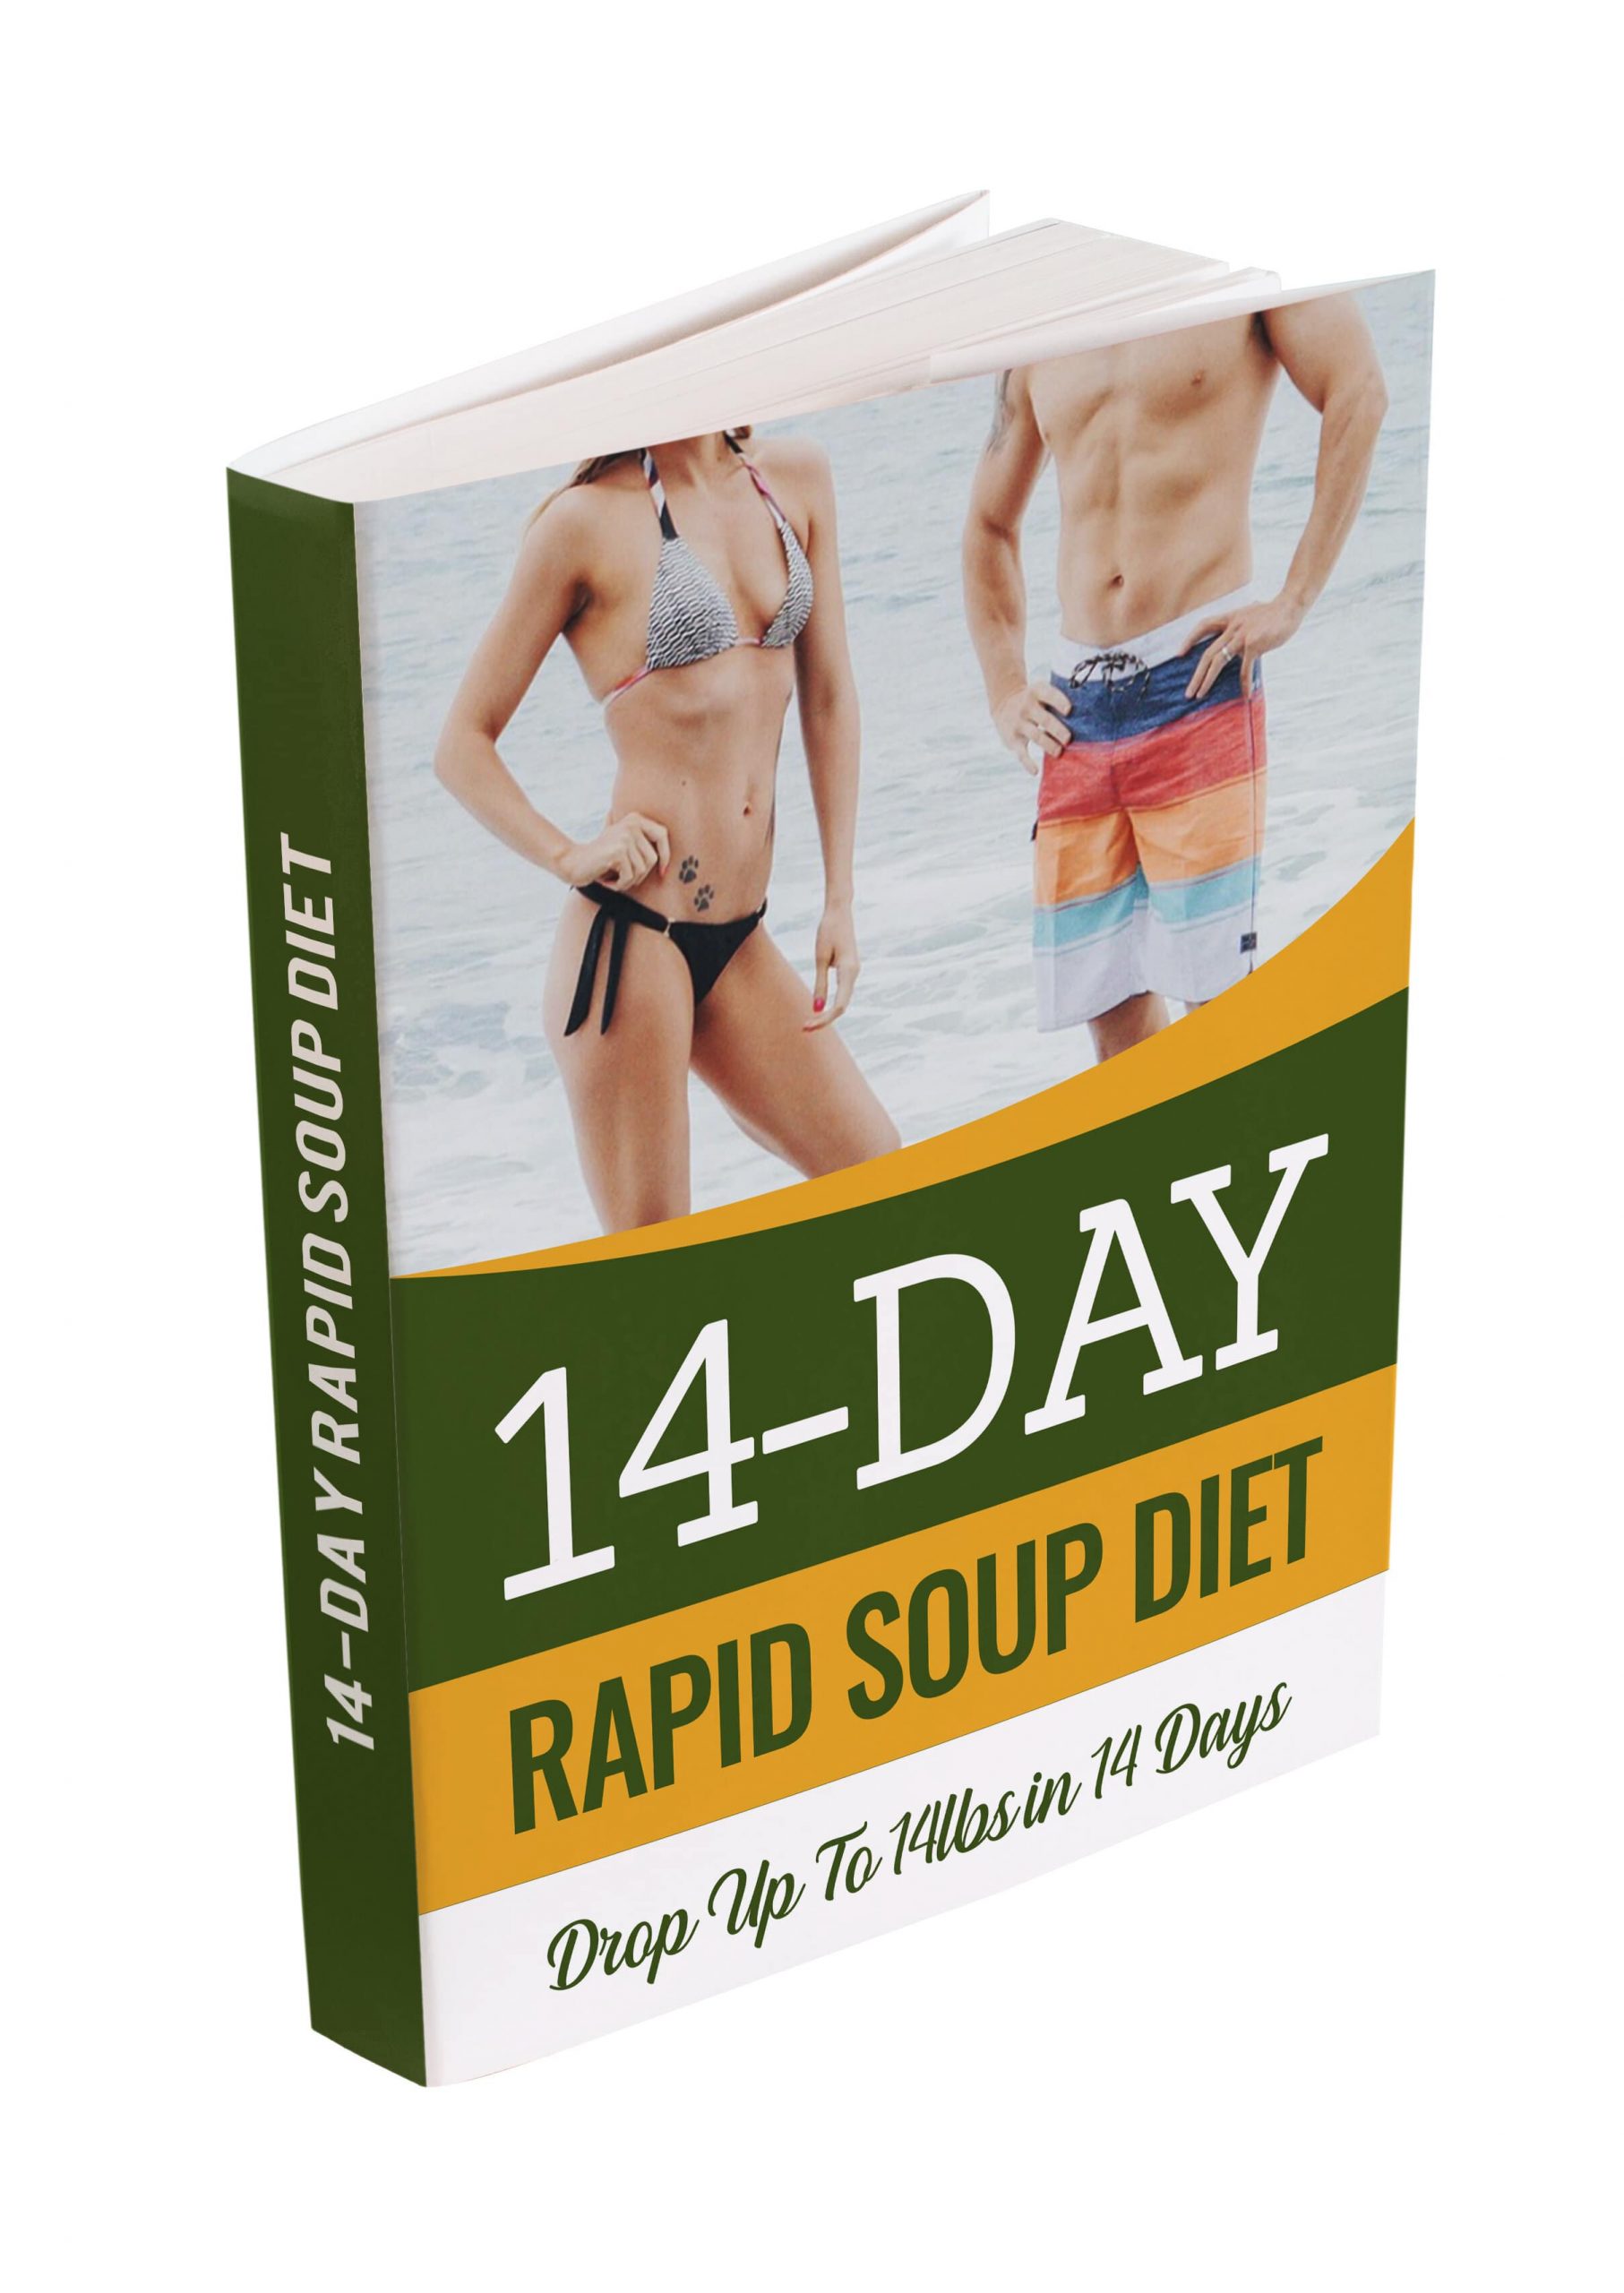 14-Day Rapid Soup Diet by Josh PDF eBook